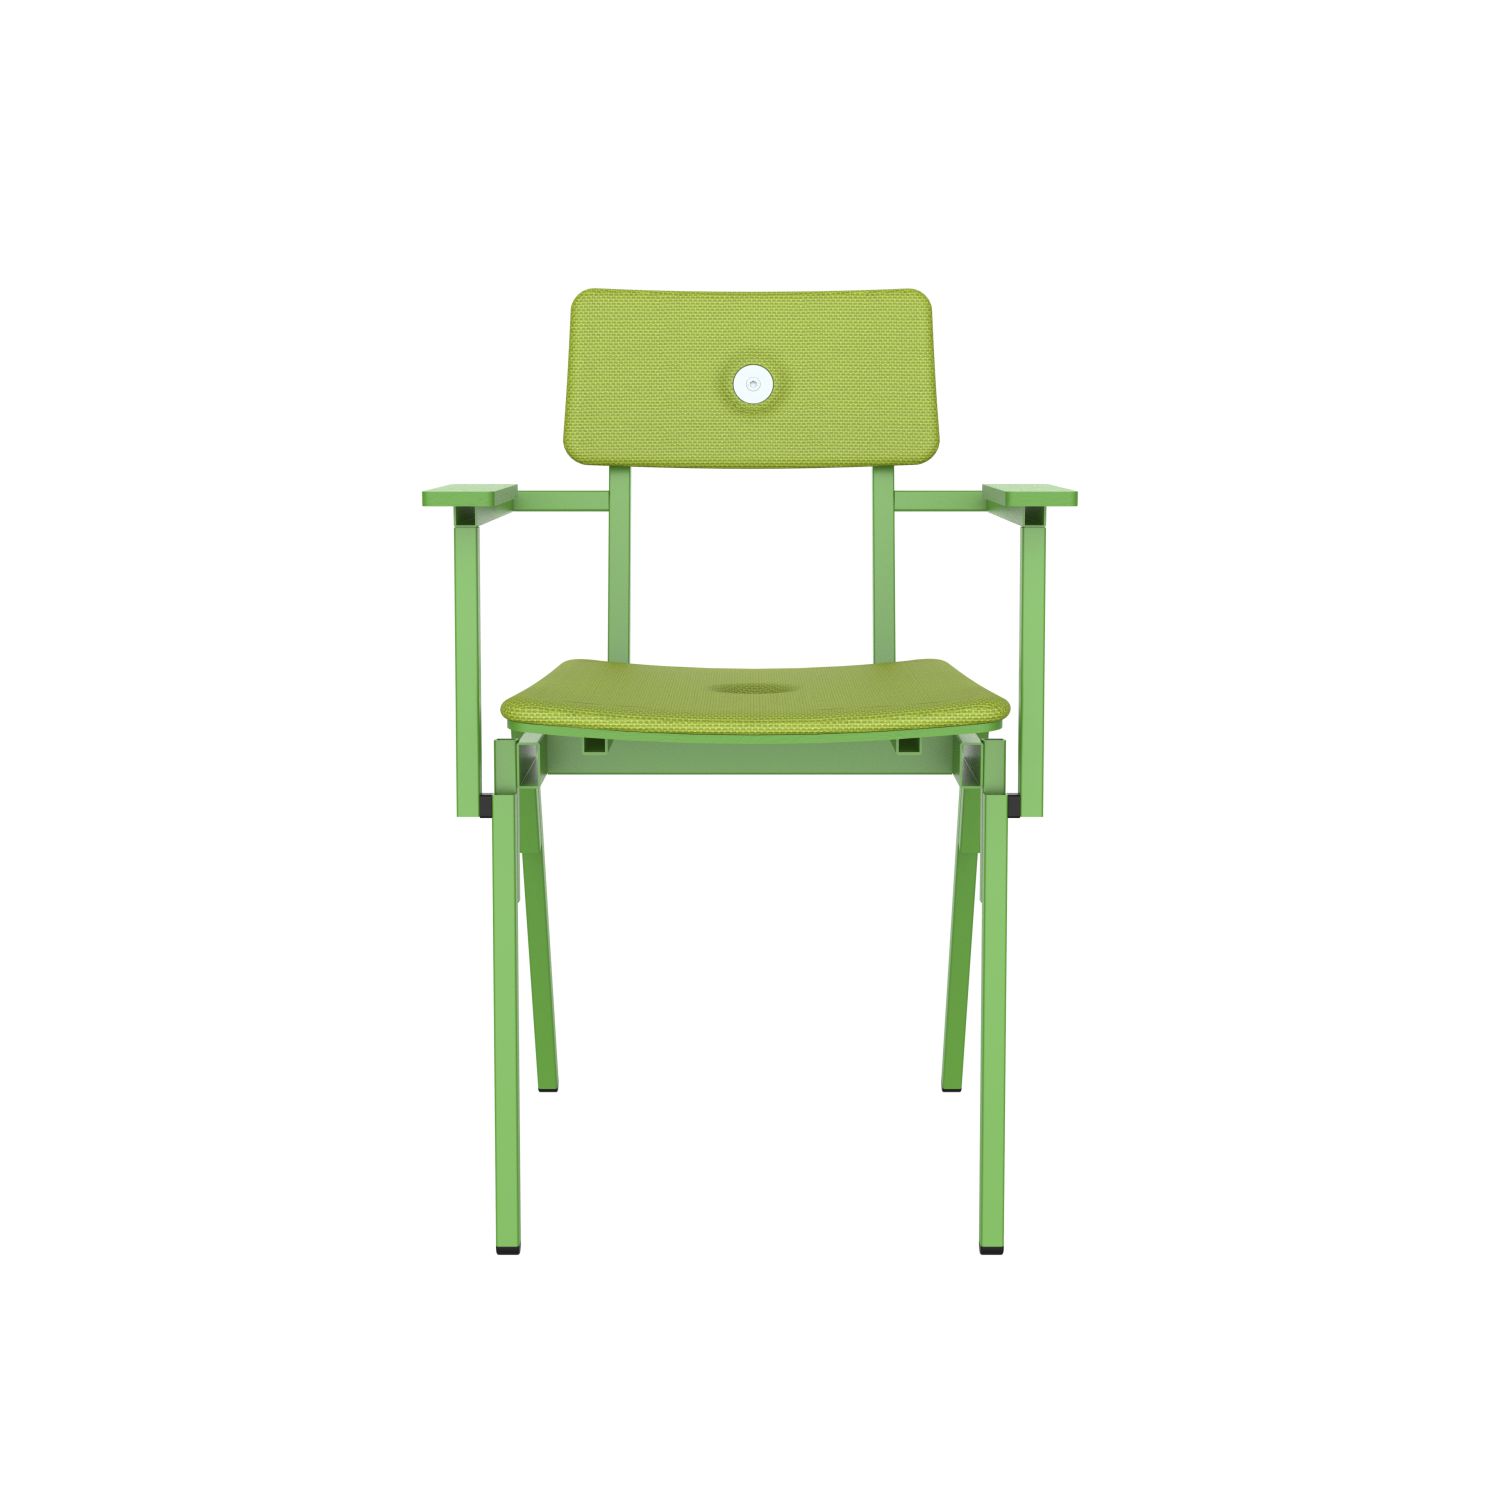 lensvelt piet hein eek mitw upholstered chair with armrests fairway green 020 yellow green ral6018 hard leg ends